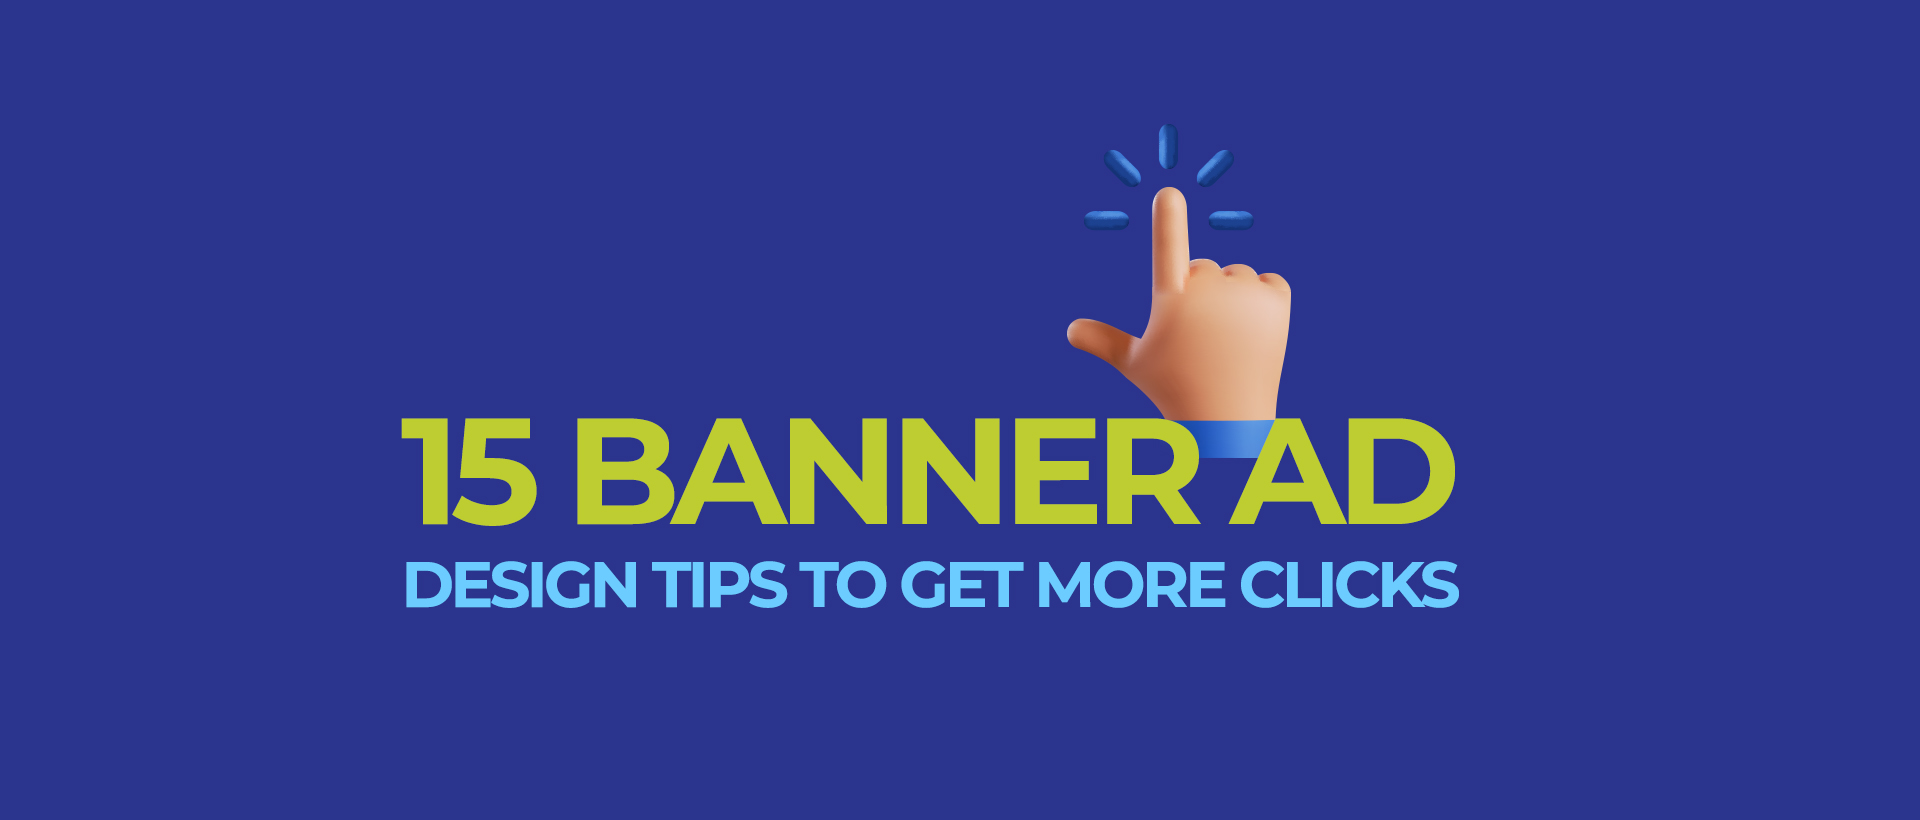 15 Banner Add Design Tips To Get More Clicks